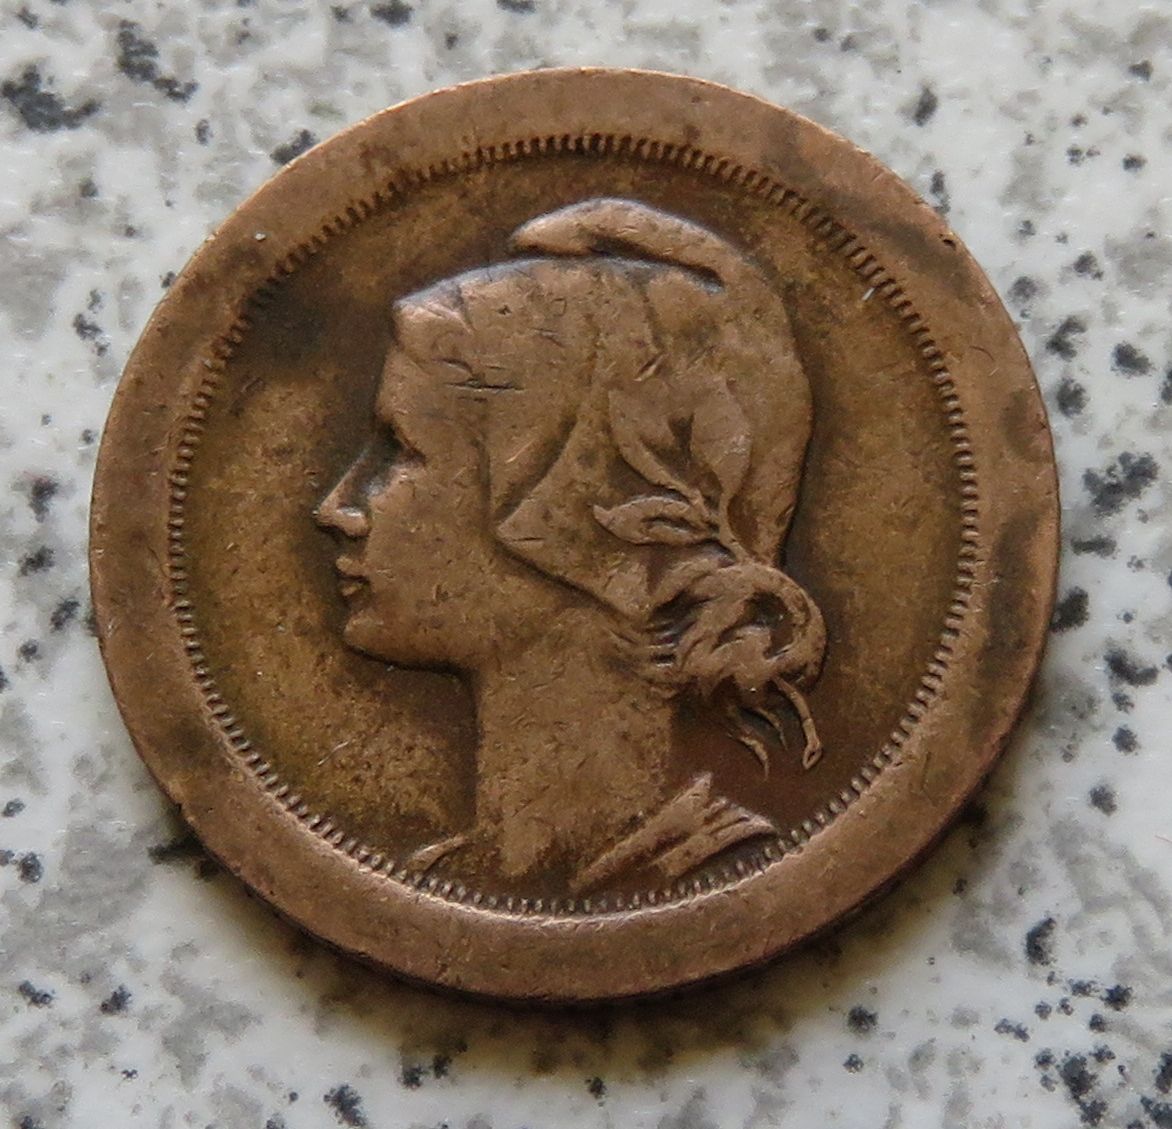  Portugal 5 Centavos 1927 (2)   